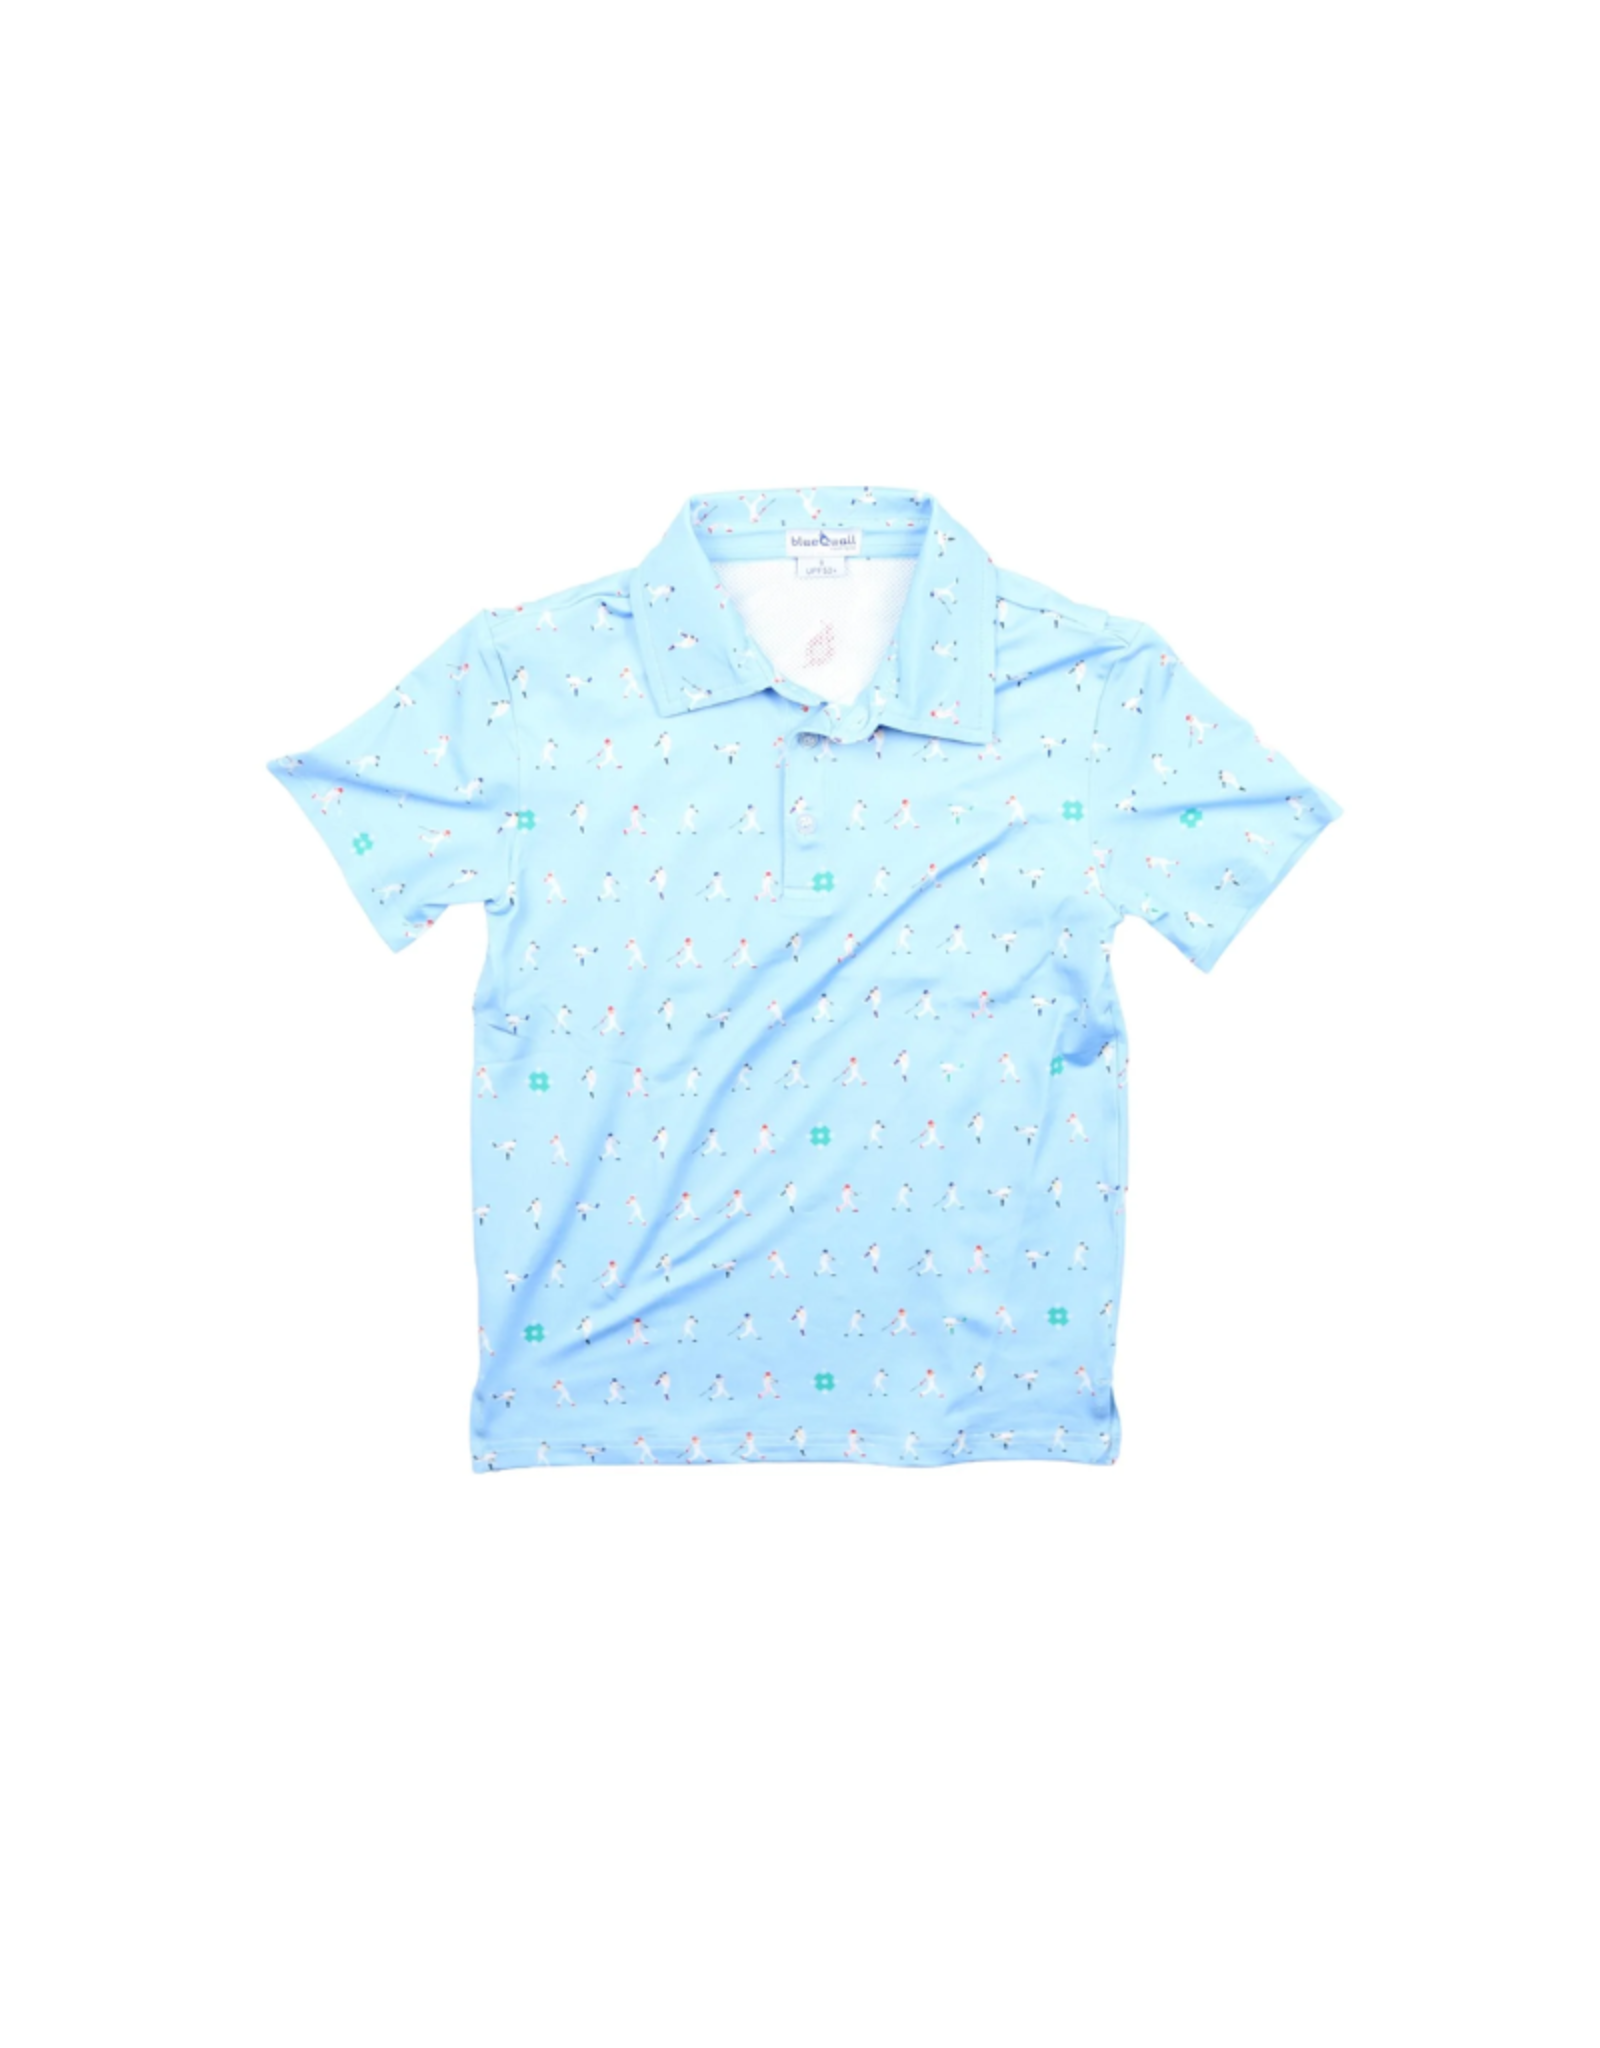 BlueQuail Clothing Co. Batter Up Polo Short Sleeve Shirt